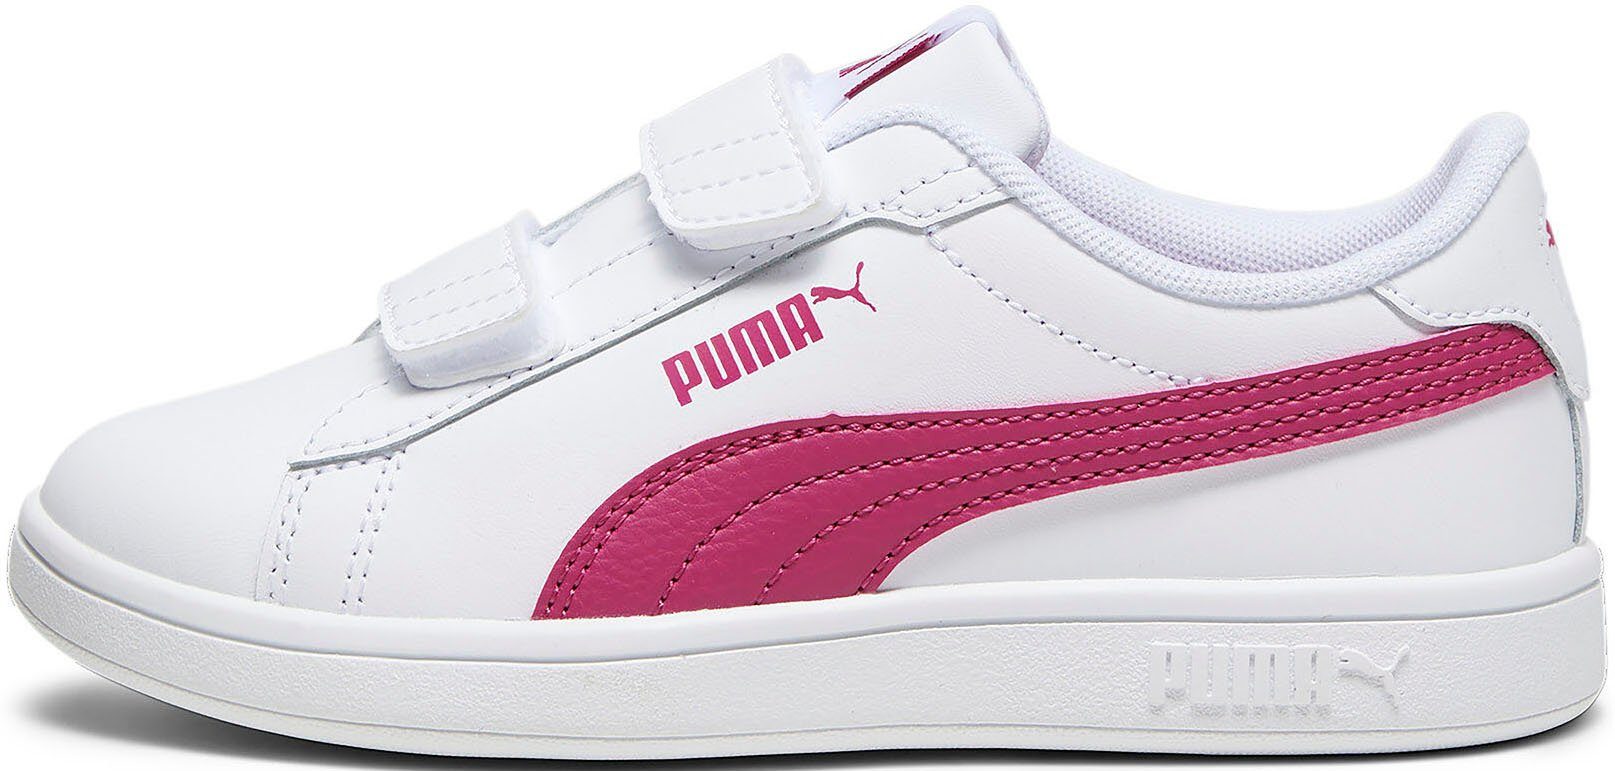 White-Pinktastic PUMA mit SMASH Klettverschluss Sneaker L PUMA 3.0 V PS